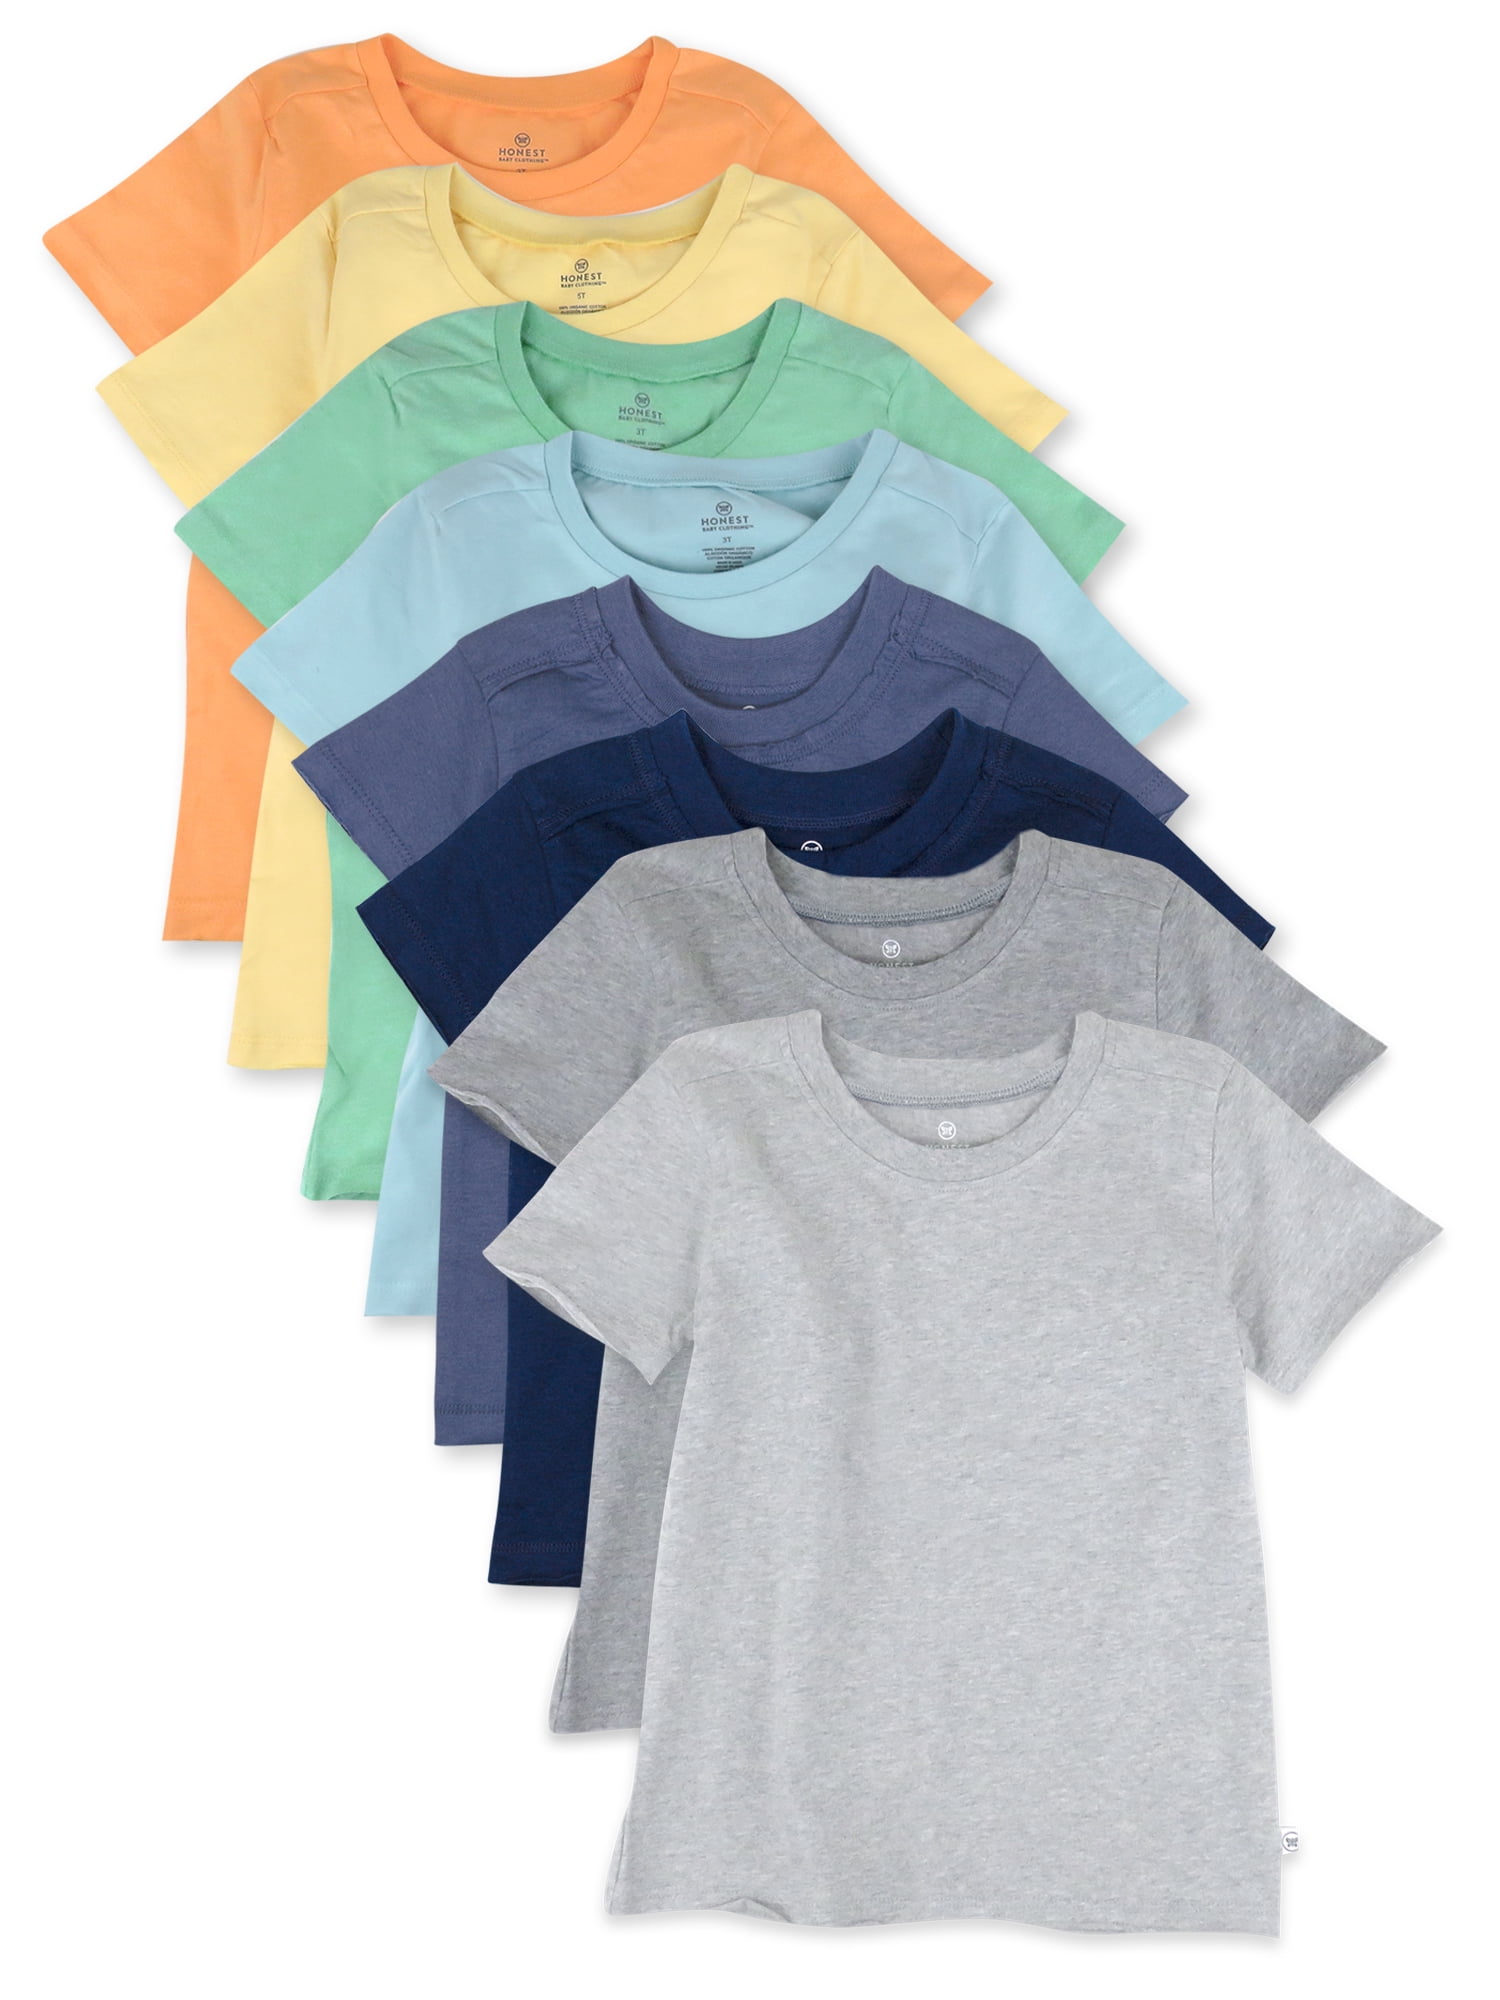 Honest Baby Clothing Baby & Toddler Boy or Girl Gender Neutral Organic  Cotton Short Sleeve T-Shirts, 8 Pack (Newborn-5T) 